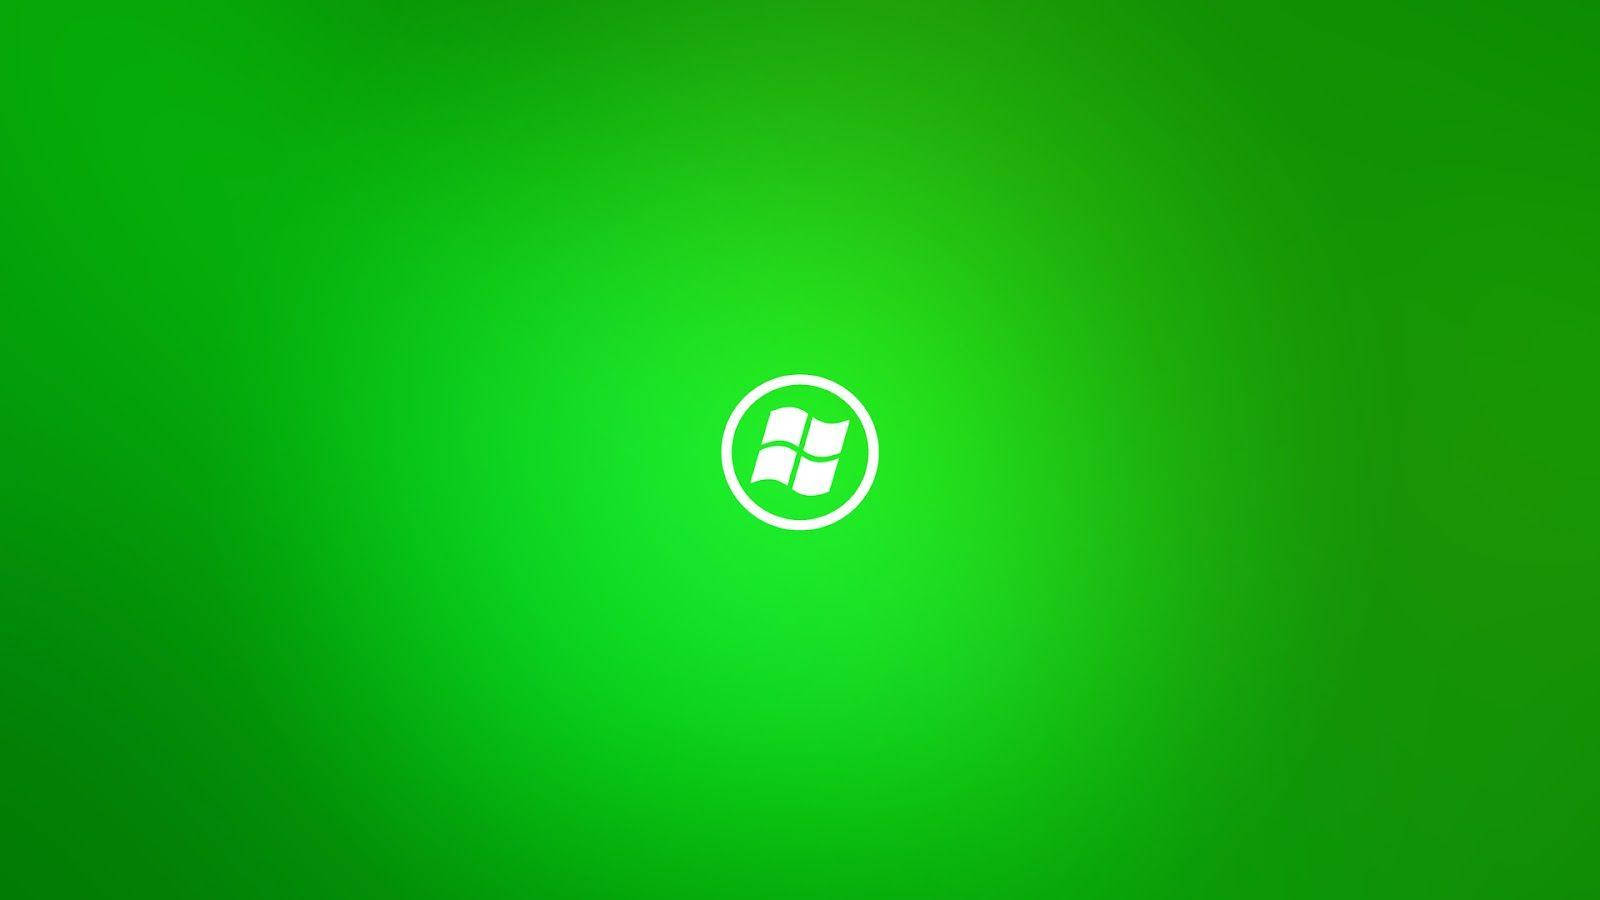 Green Windows 11 Wallpaper : r/Windows11